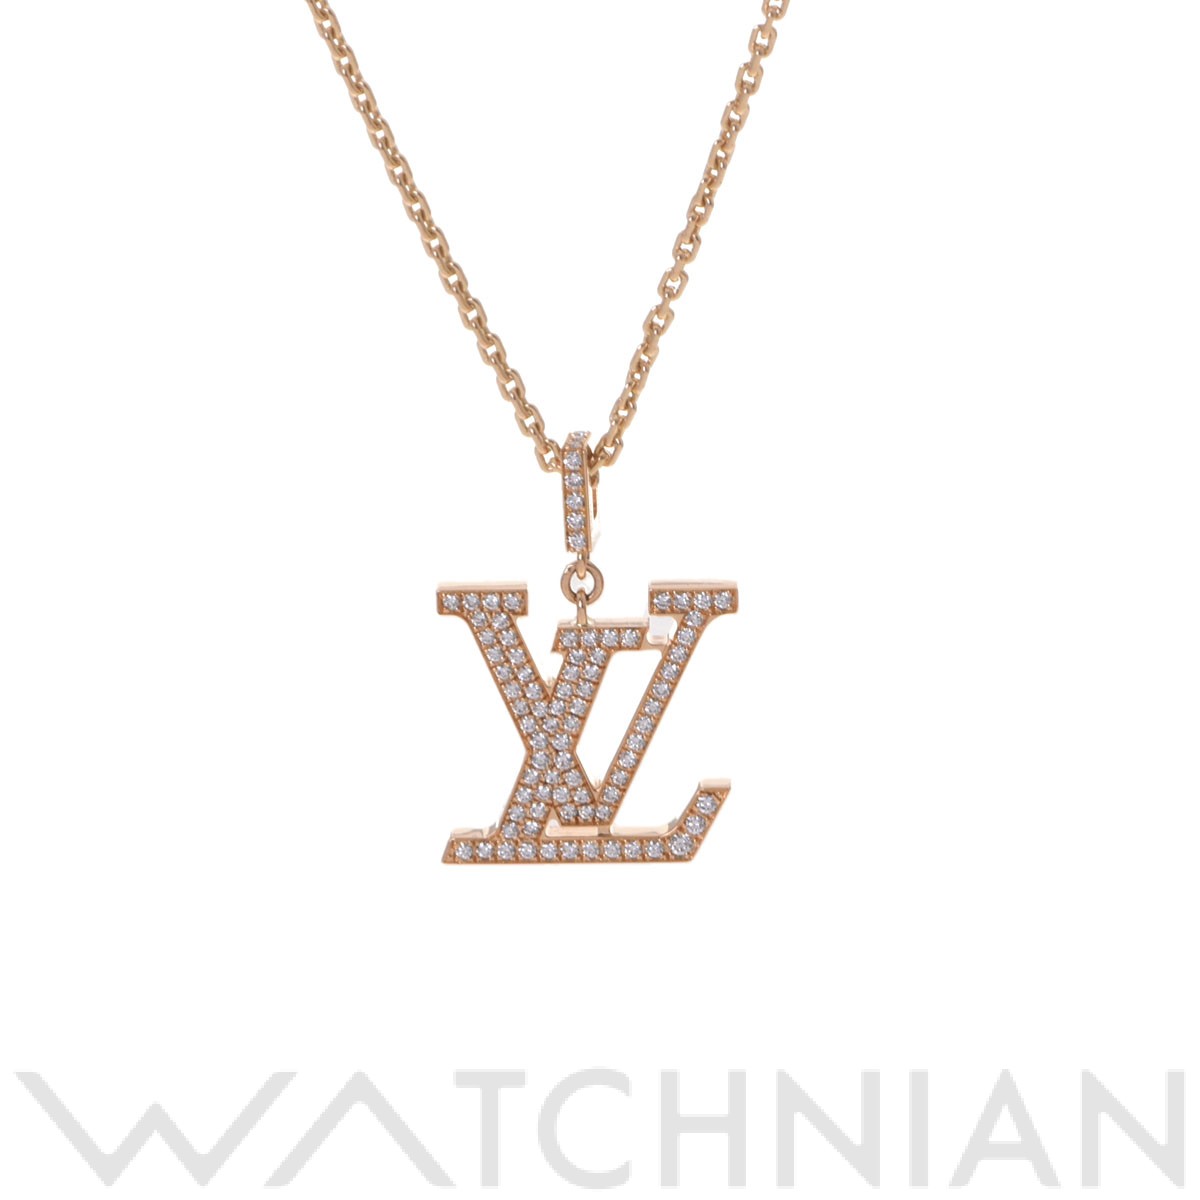 Louis Vuitton Lv idylle blossom pendant, yellow gold and diamonds (Q93849)